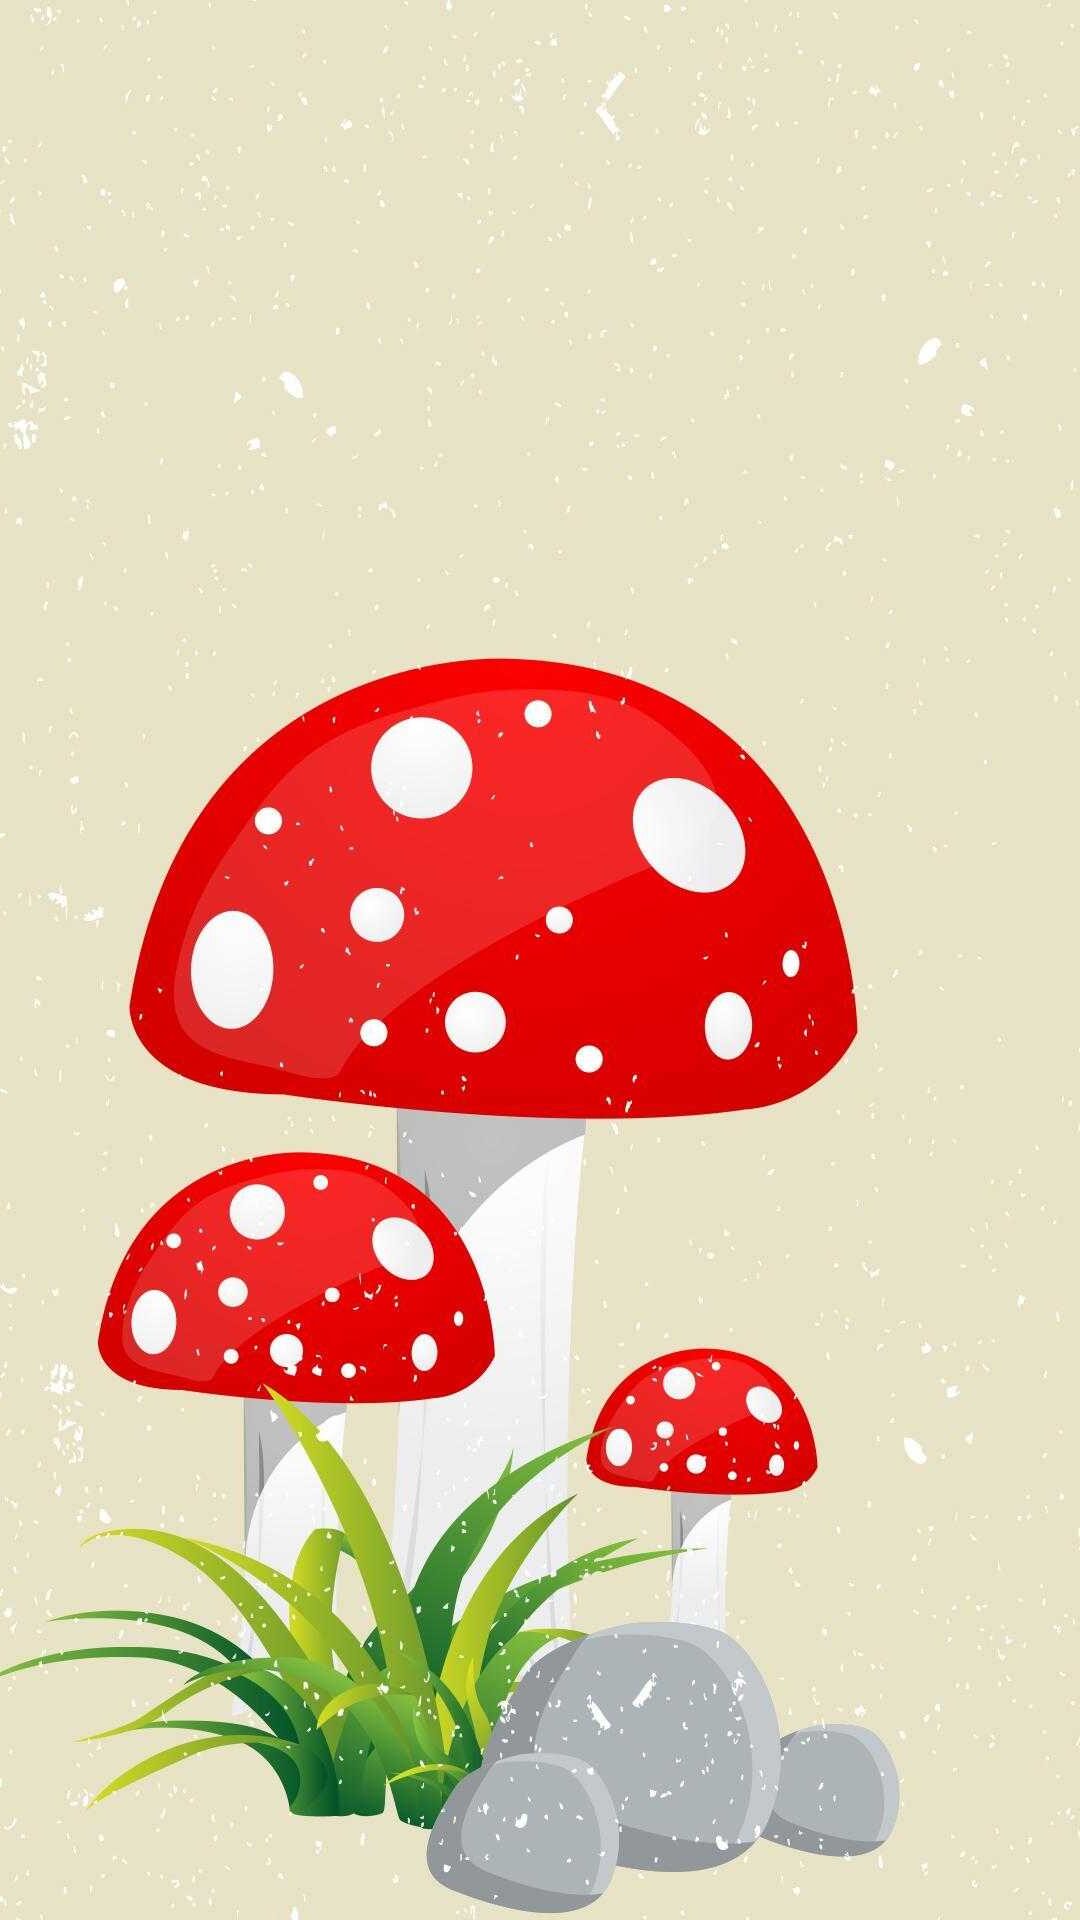 Cute Mushroom in Spring  Other  Nature Background Wallpapers on Desktop  Nexus Image 1416359